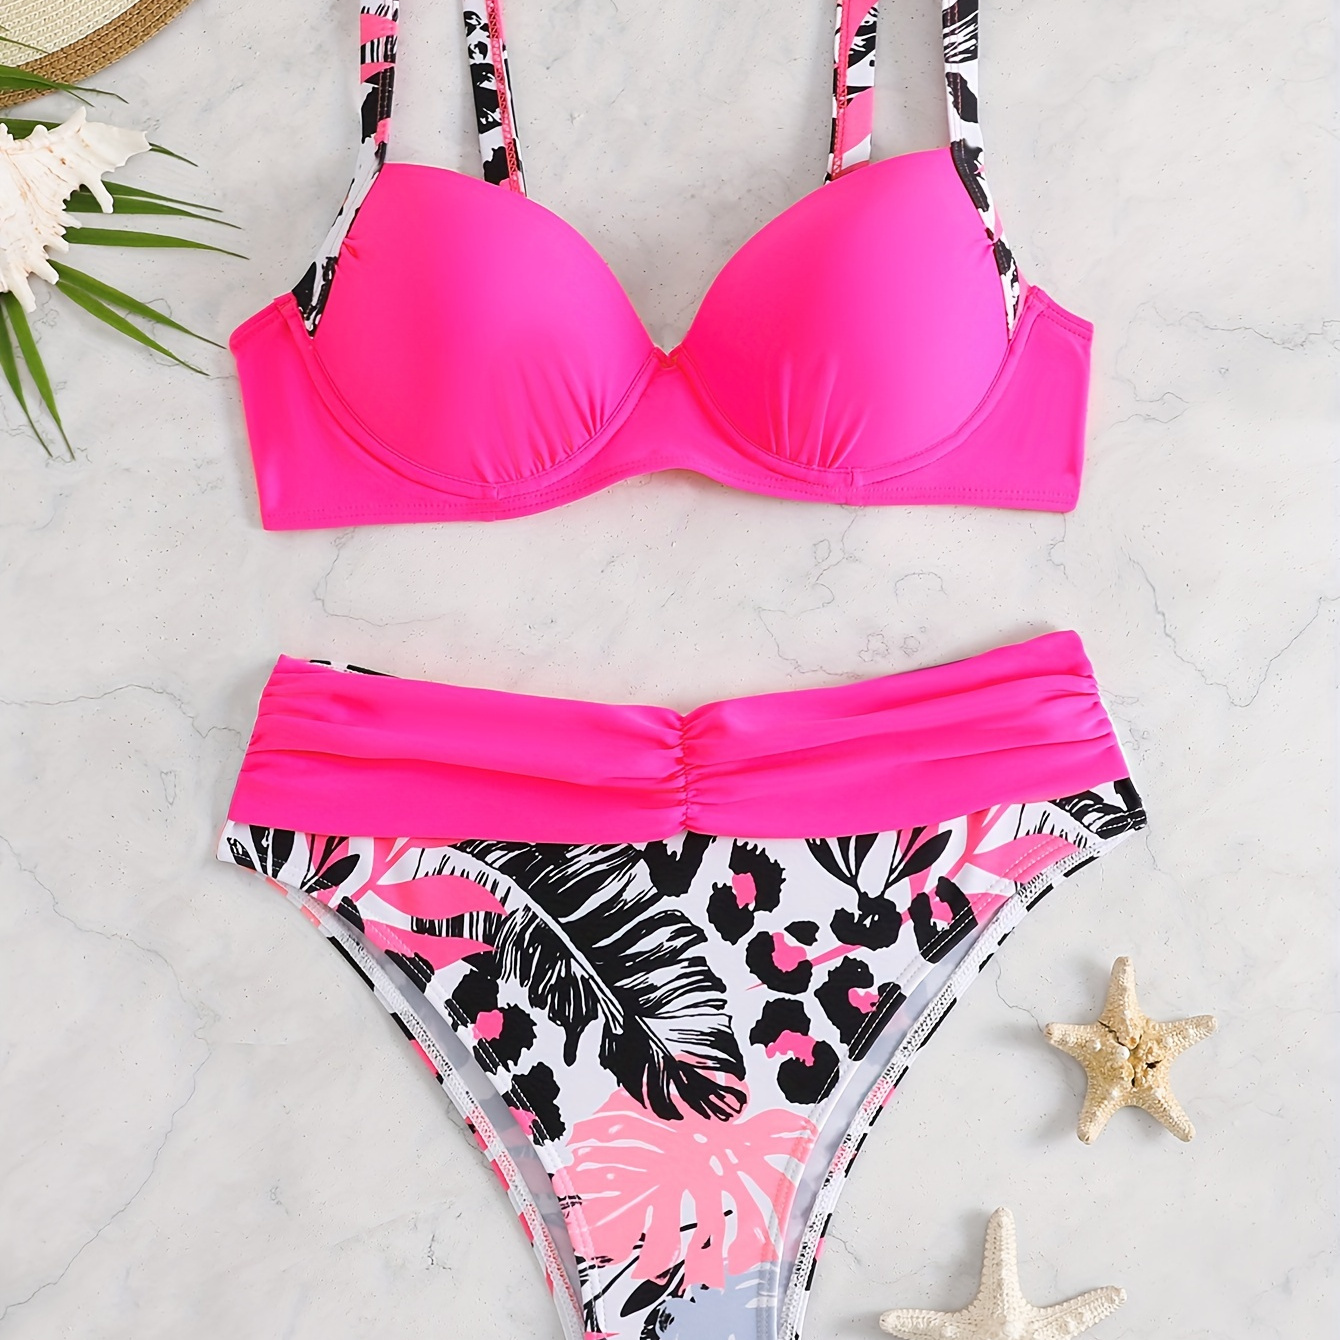 

High Cut Bikini Set For Women, Tropical Print, Two-piece Swimwear With V Neck Top, Beachwear, Summer Fashion, Poolside Outfit